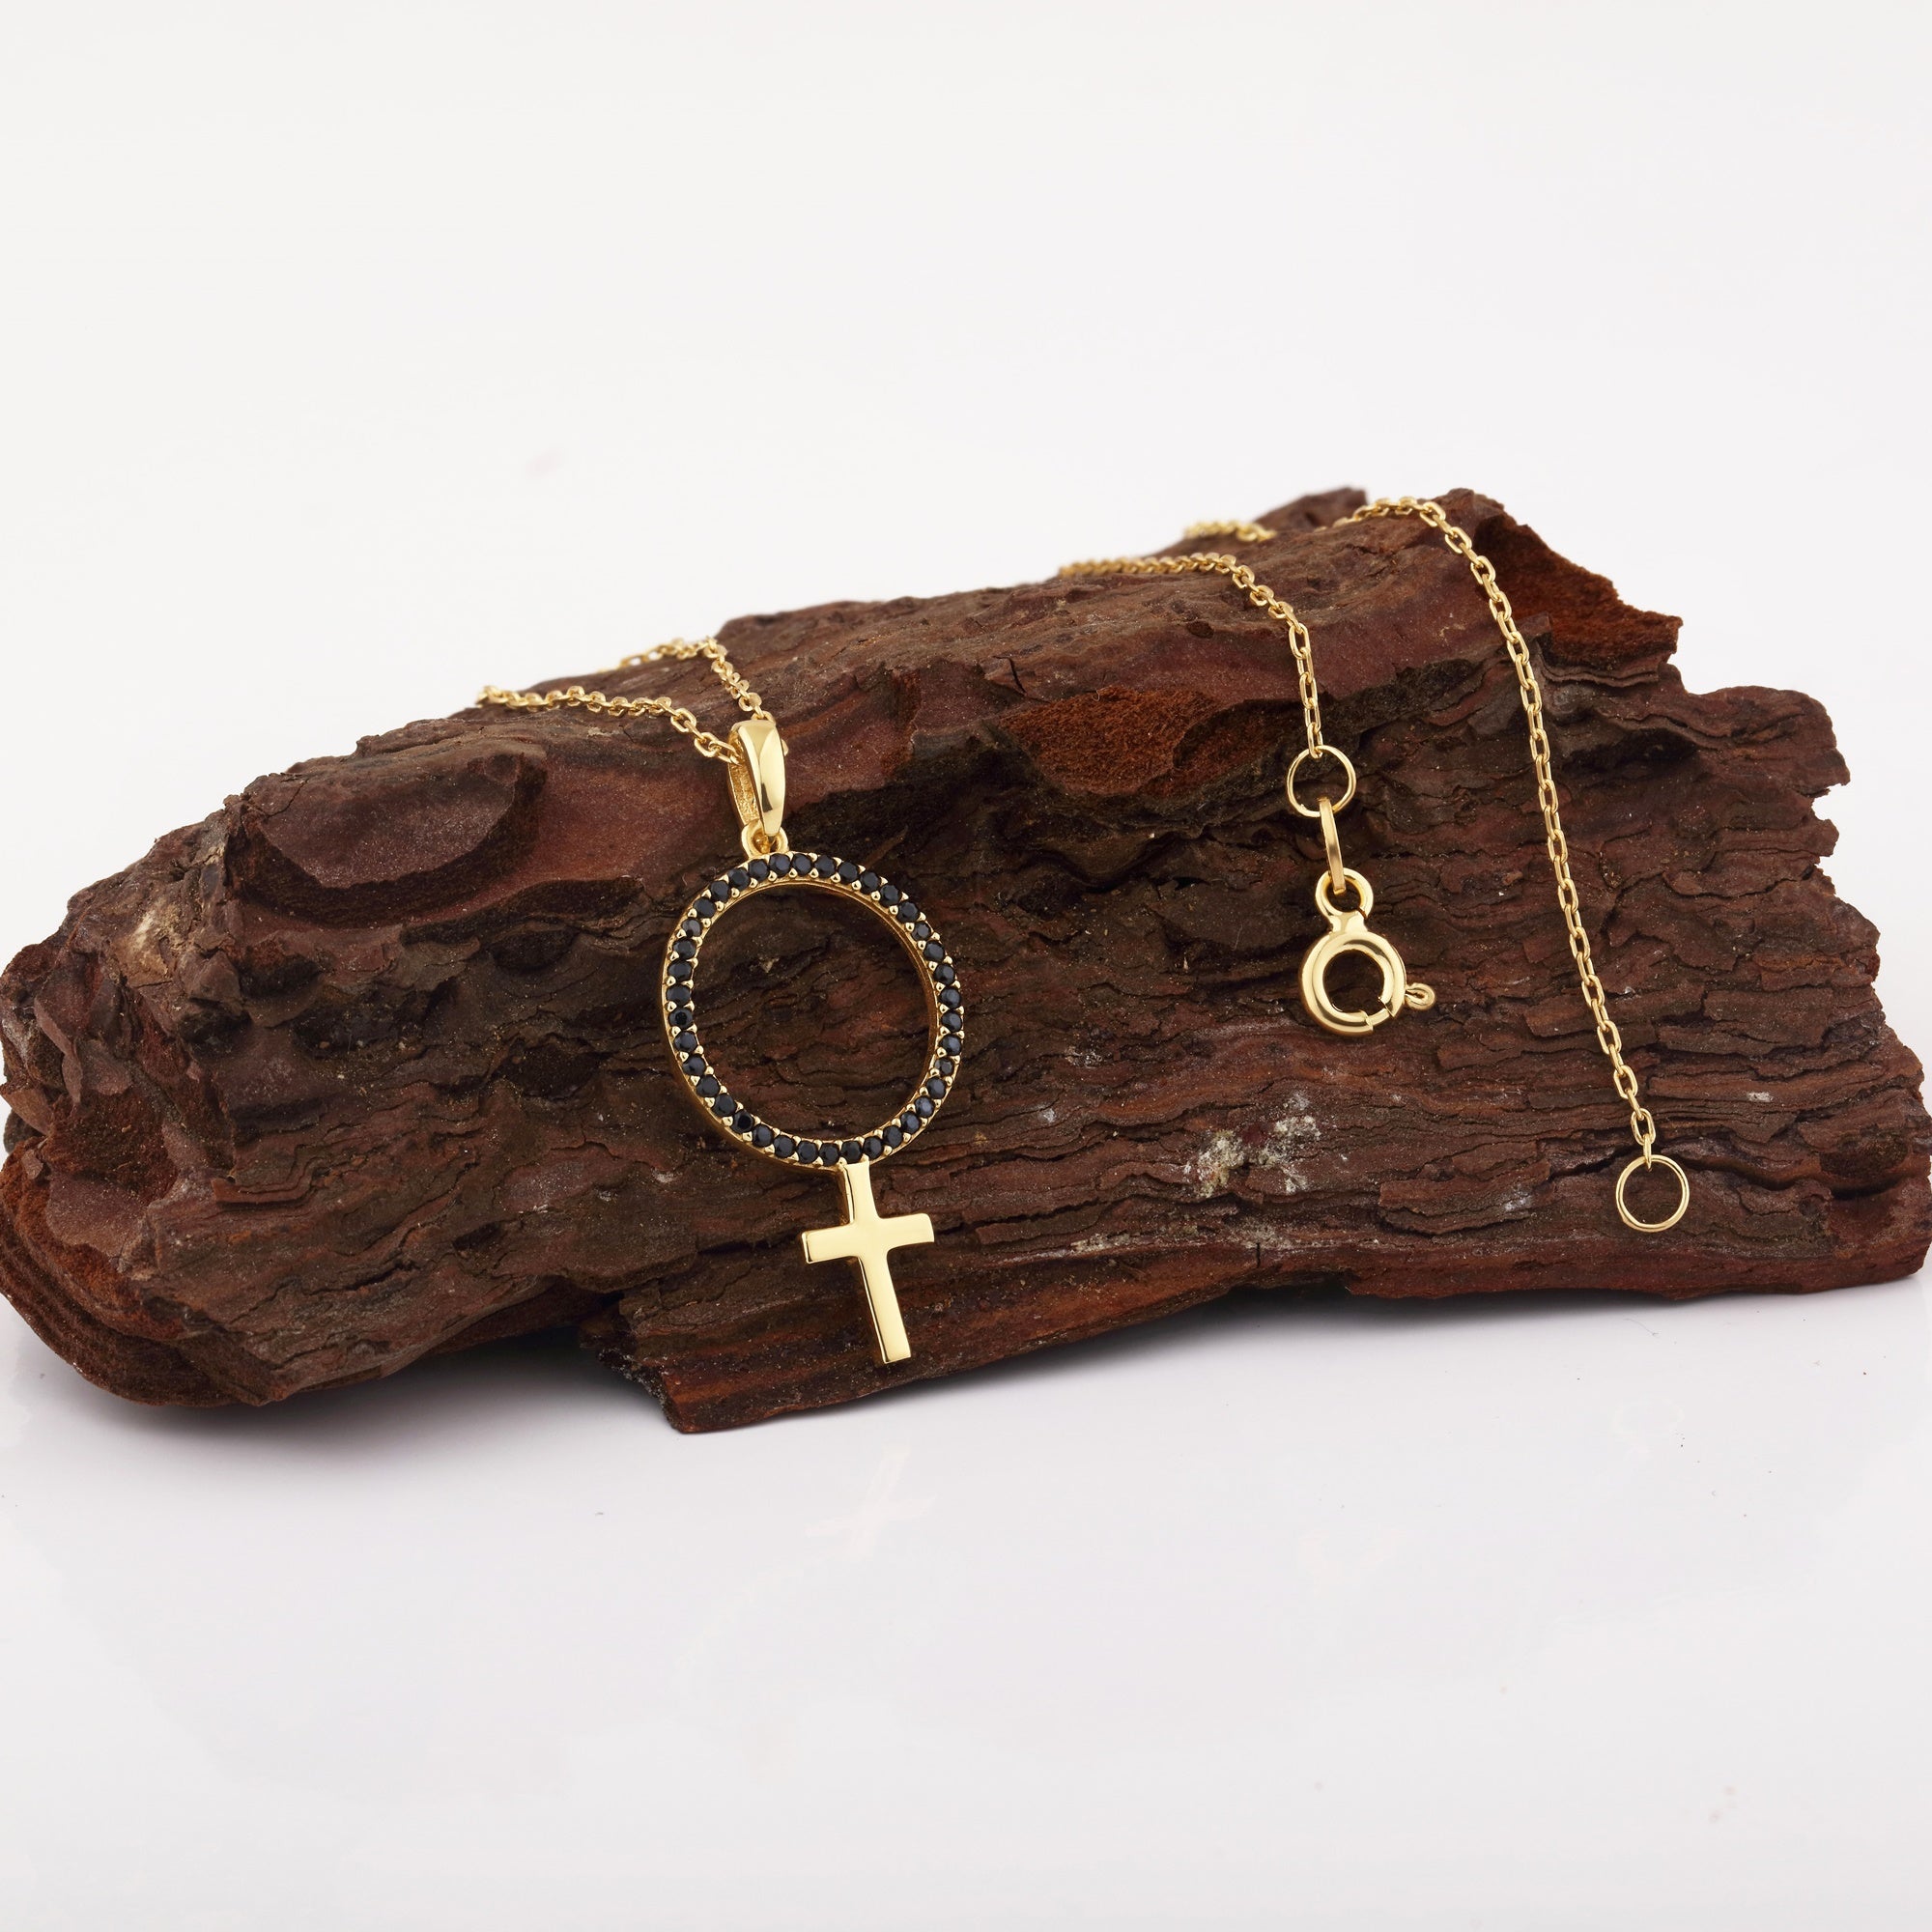 Gold Cross Necklace, Black Stone Cross Necklace, Gold Cross Necklace Women